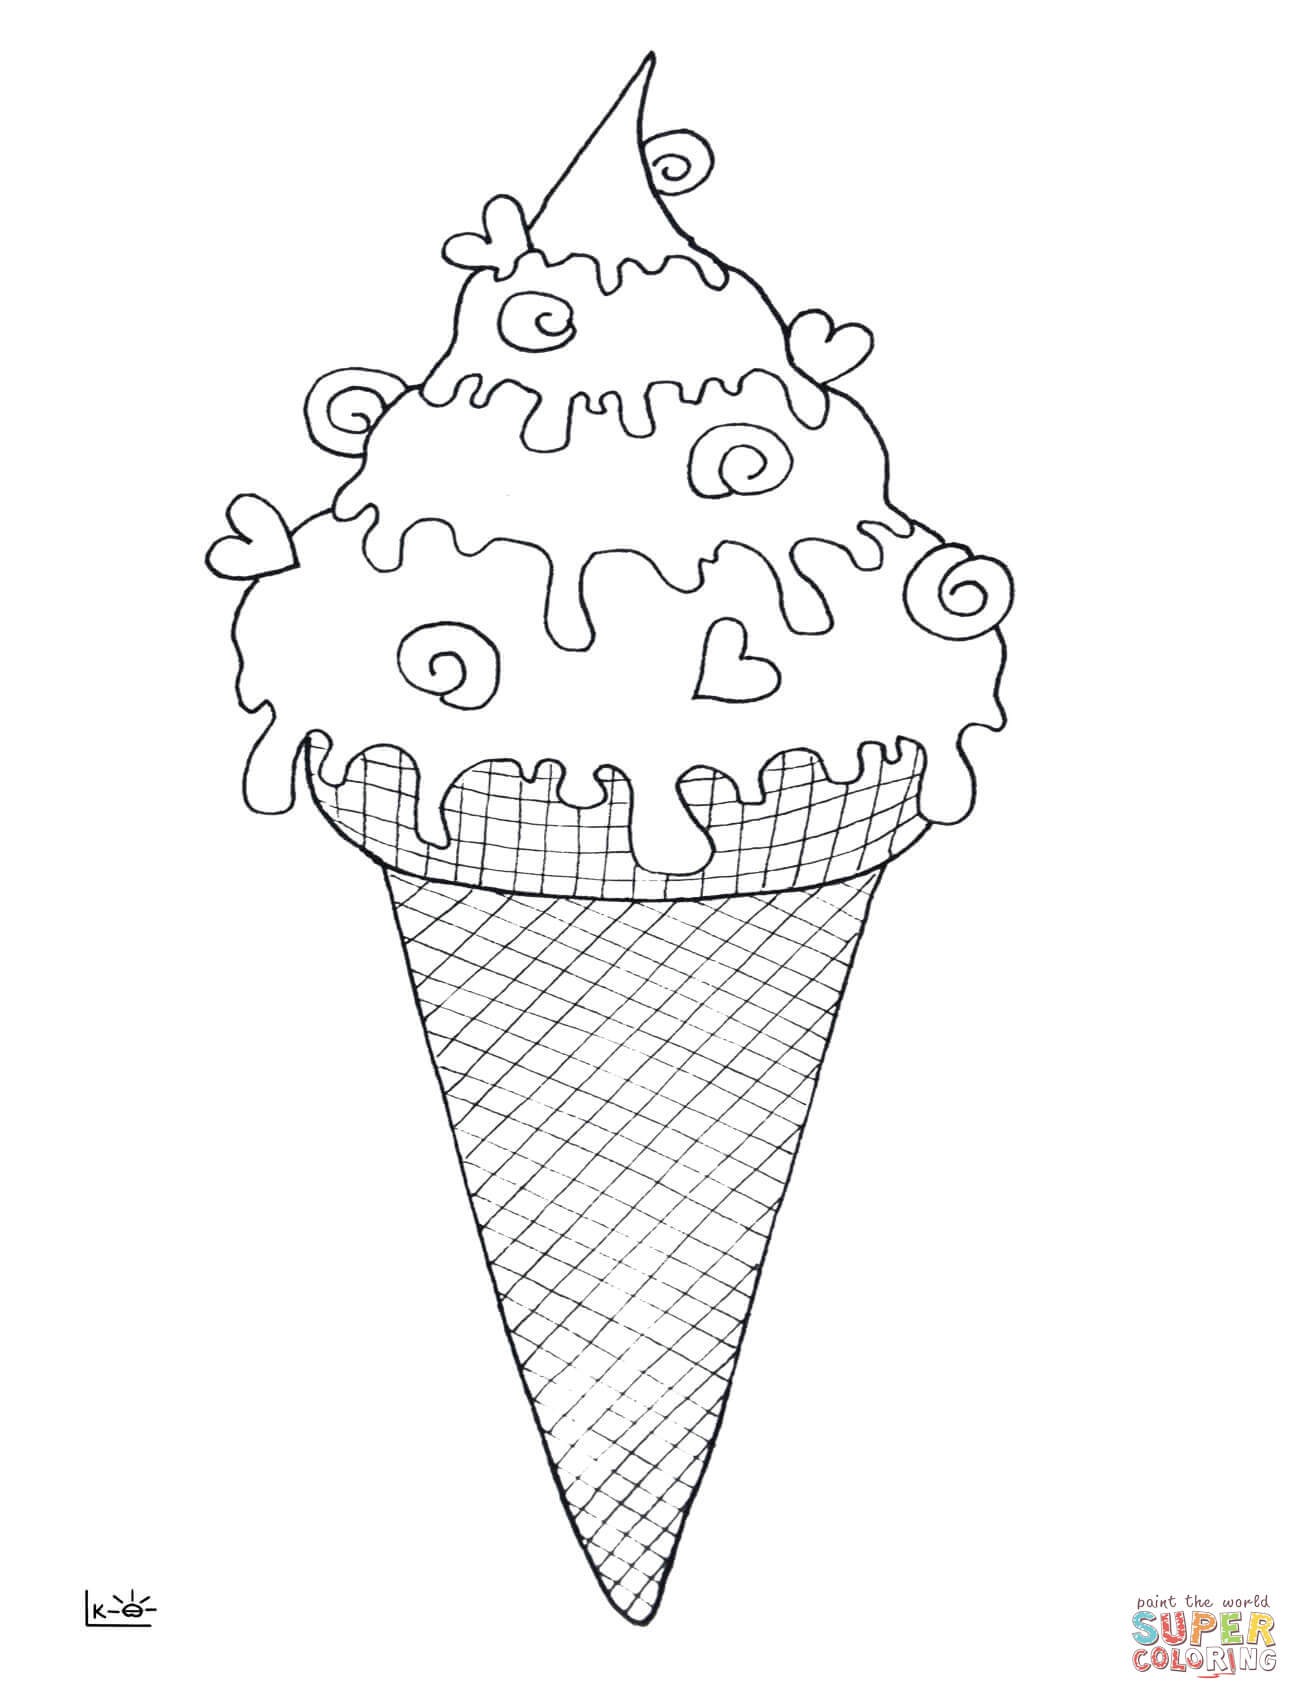 free-ice-cream-cone-coloring-page-download-free-ice-cream-cone